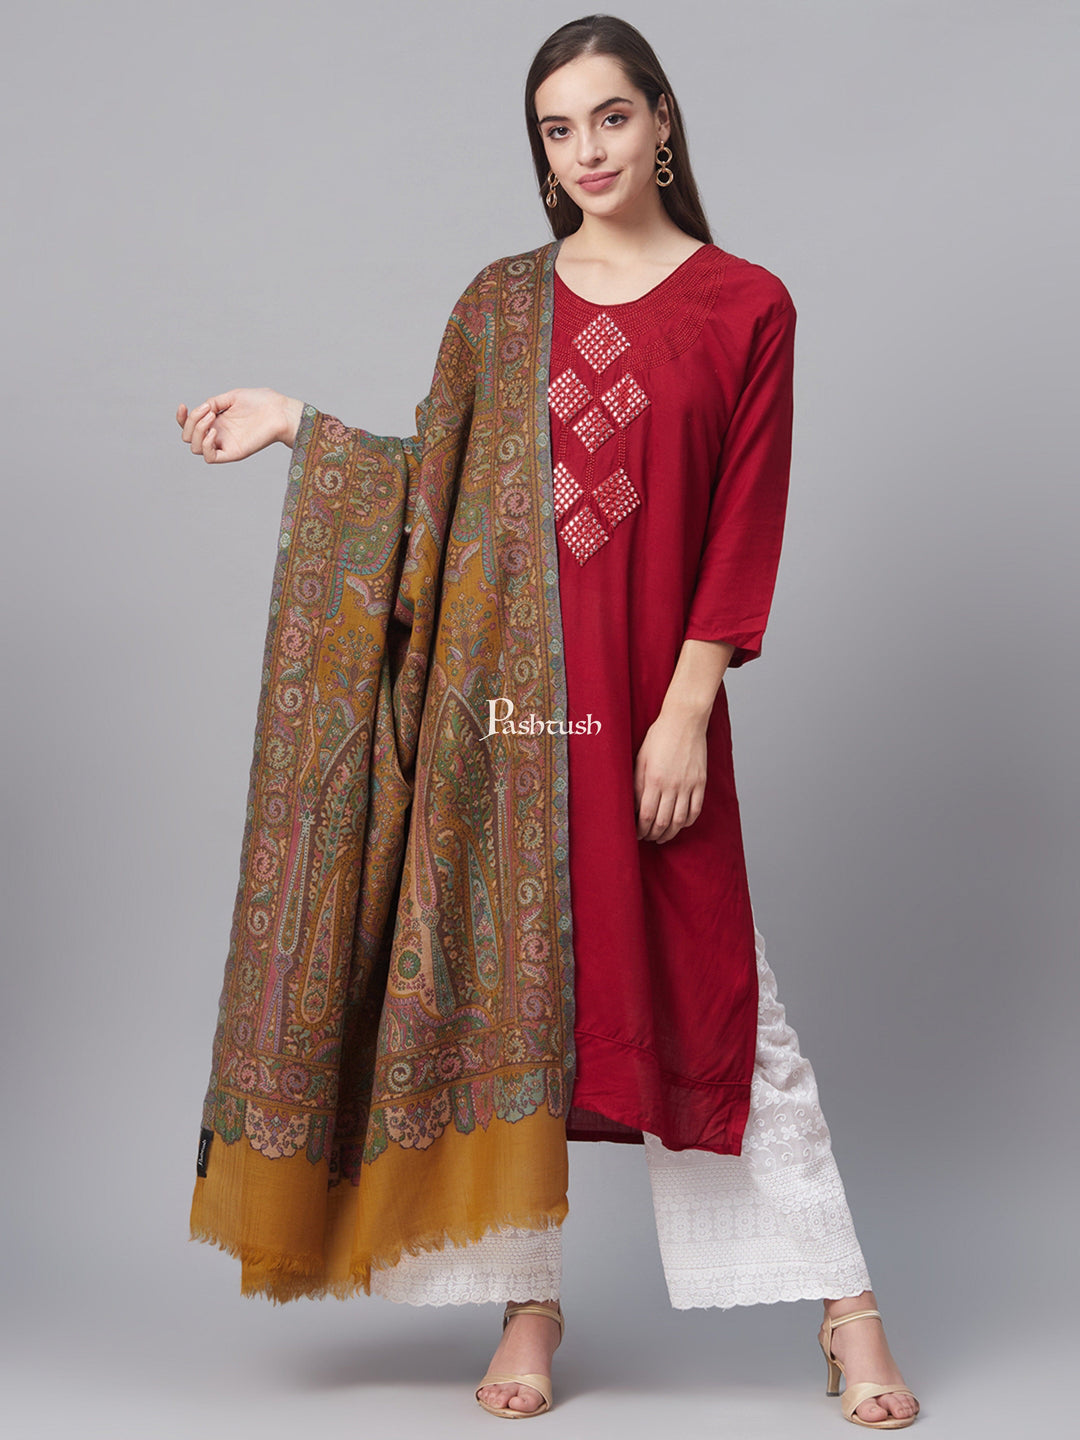 Pashtush India Womens Shawls Pashtush Women 100% Pure Wool, With Woolmark Certificate, Woven Kalamkari Design Shawl, Mustard